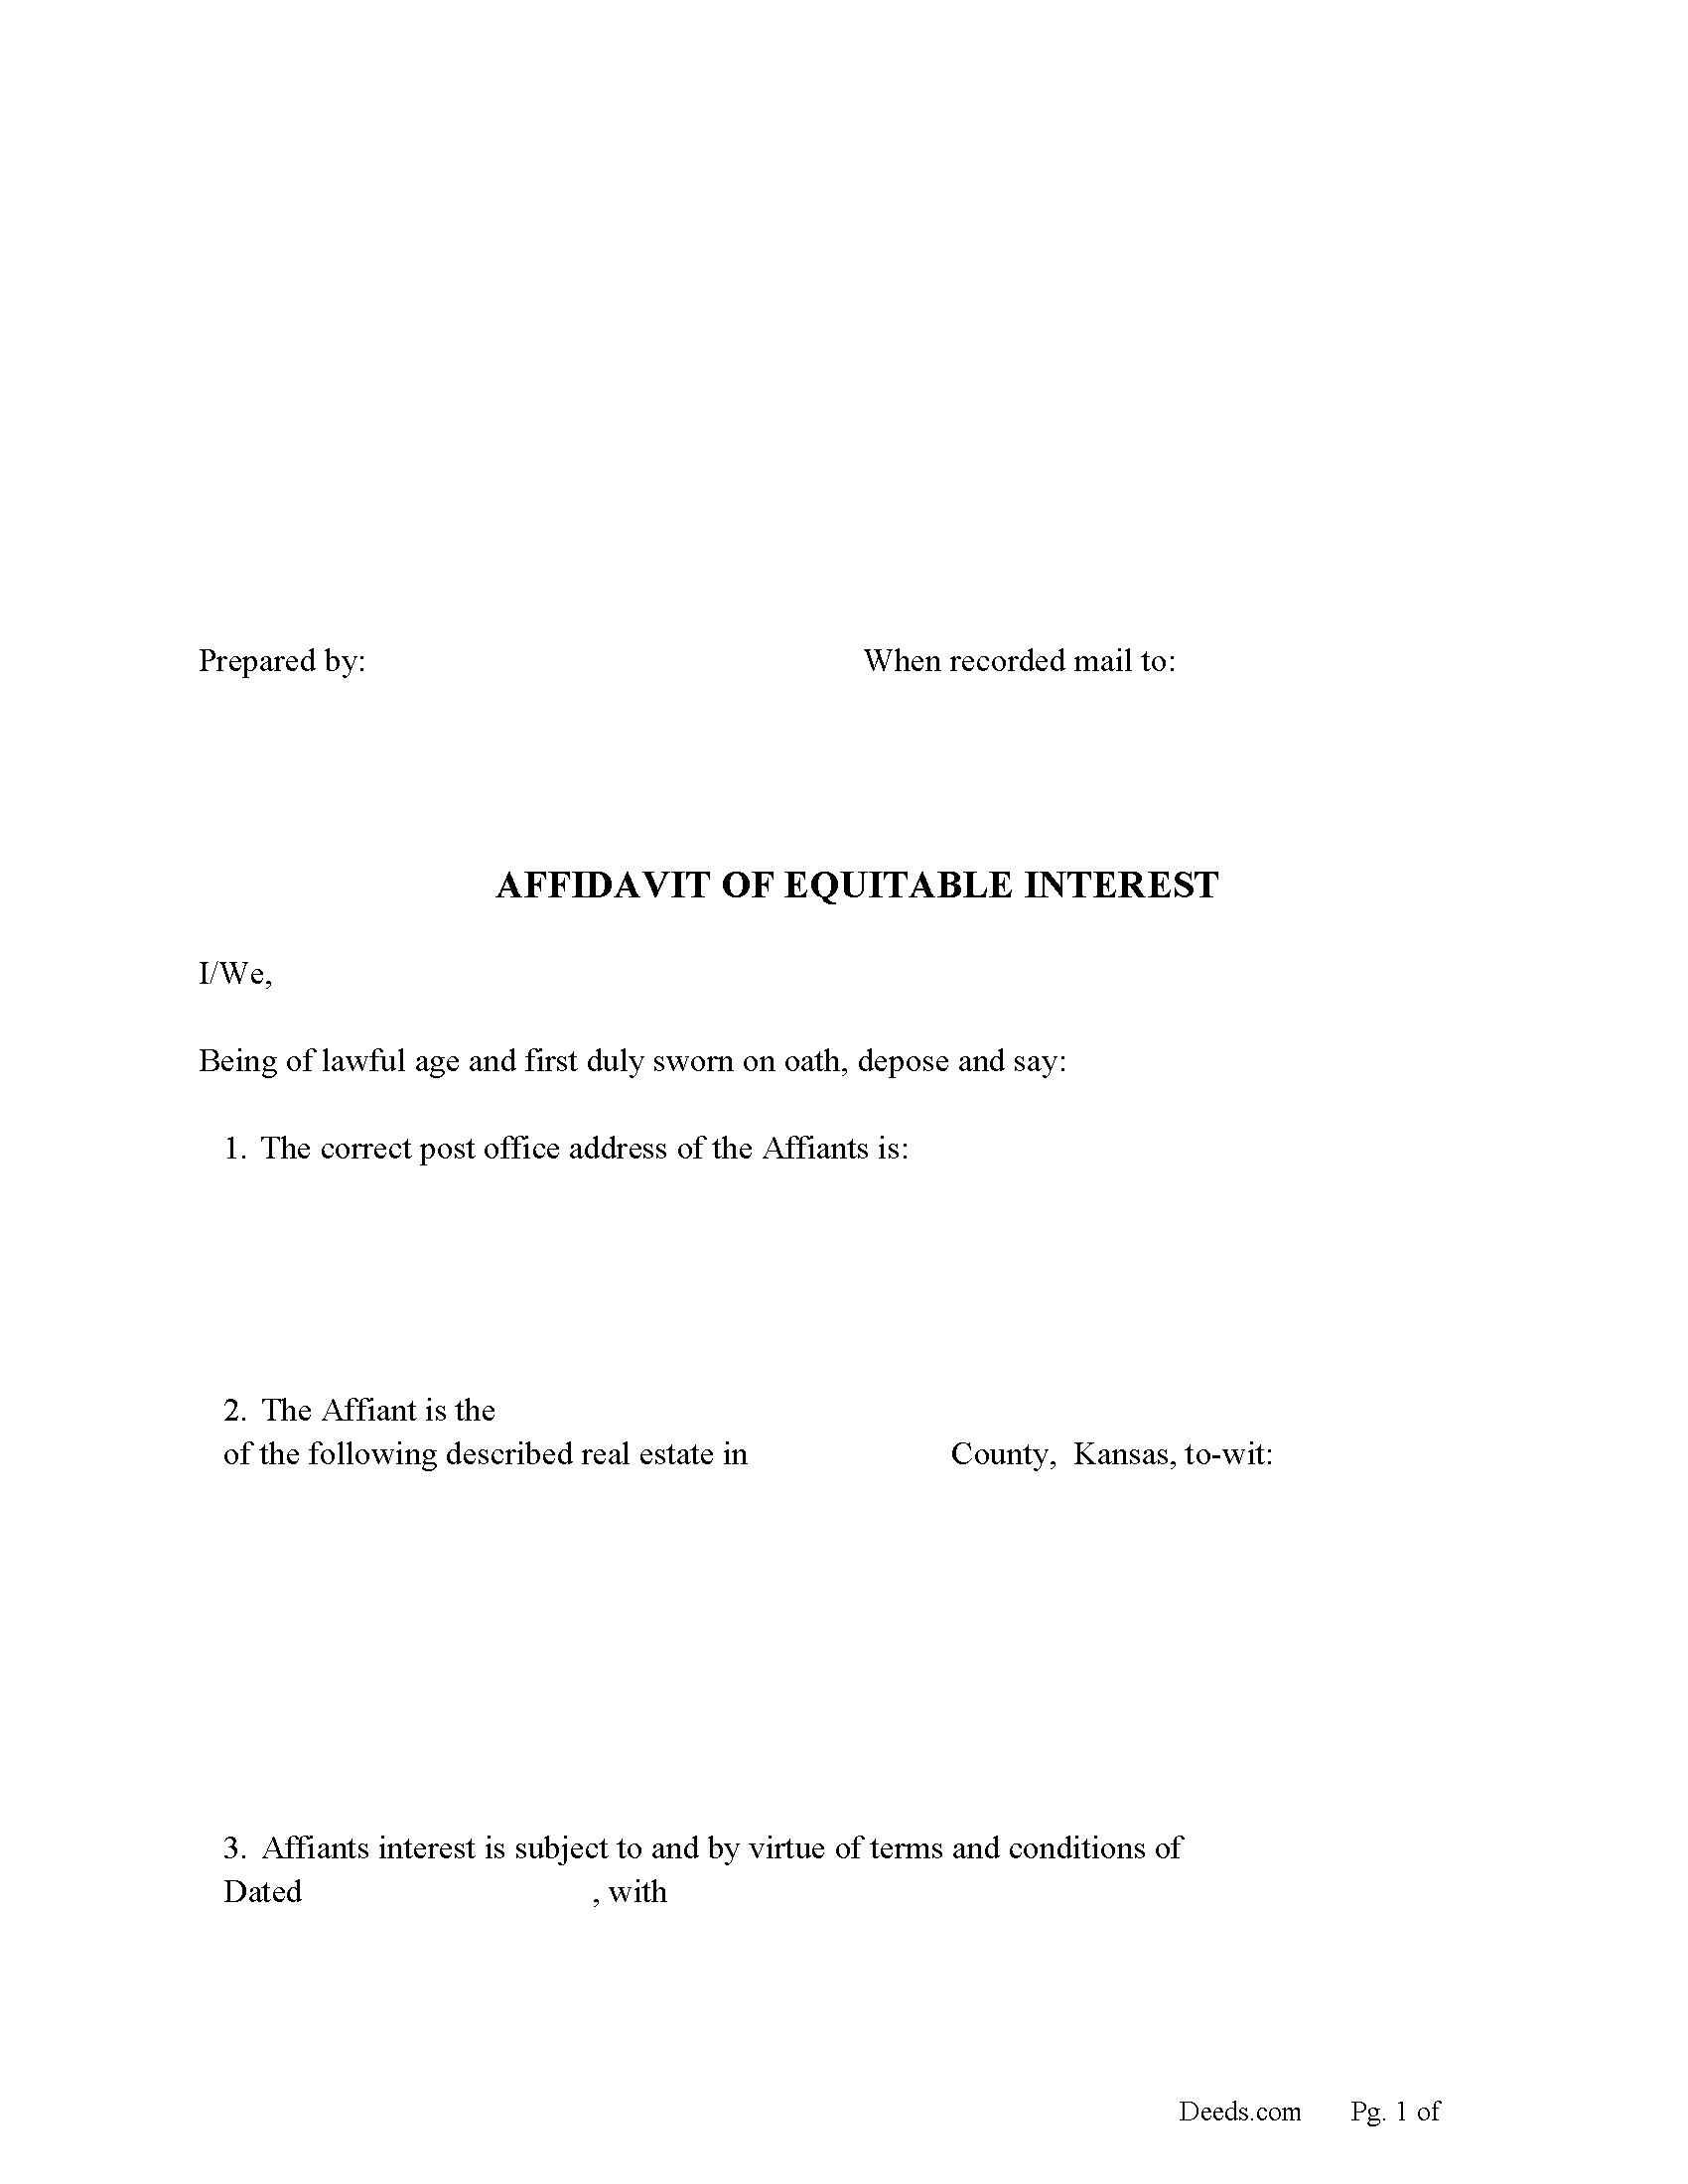 Seward County Affidavit for Equitable Interest Form